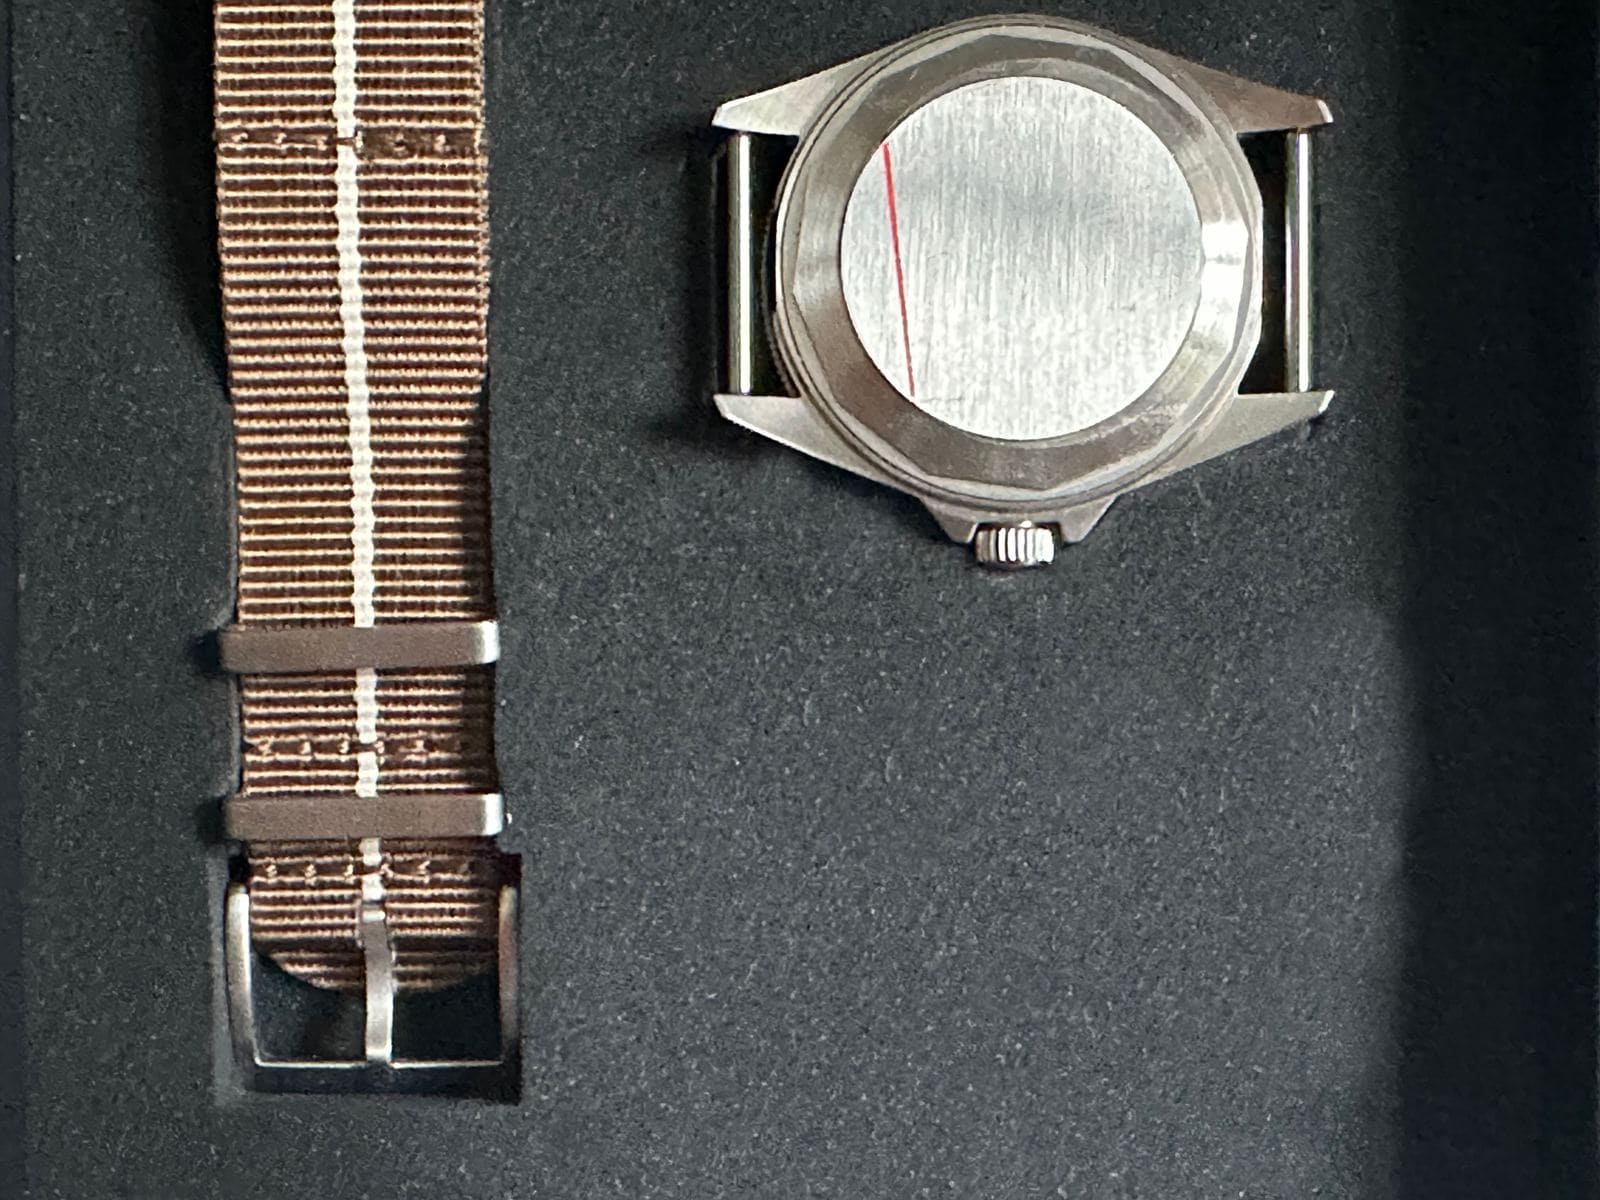 BND Watches Modell MNBRO Rückseite in Box